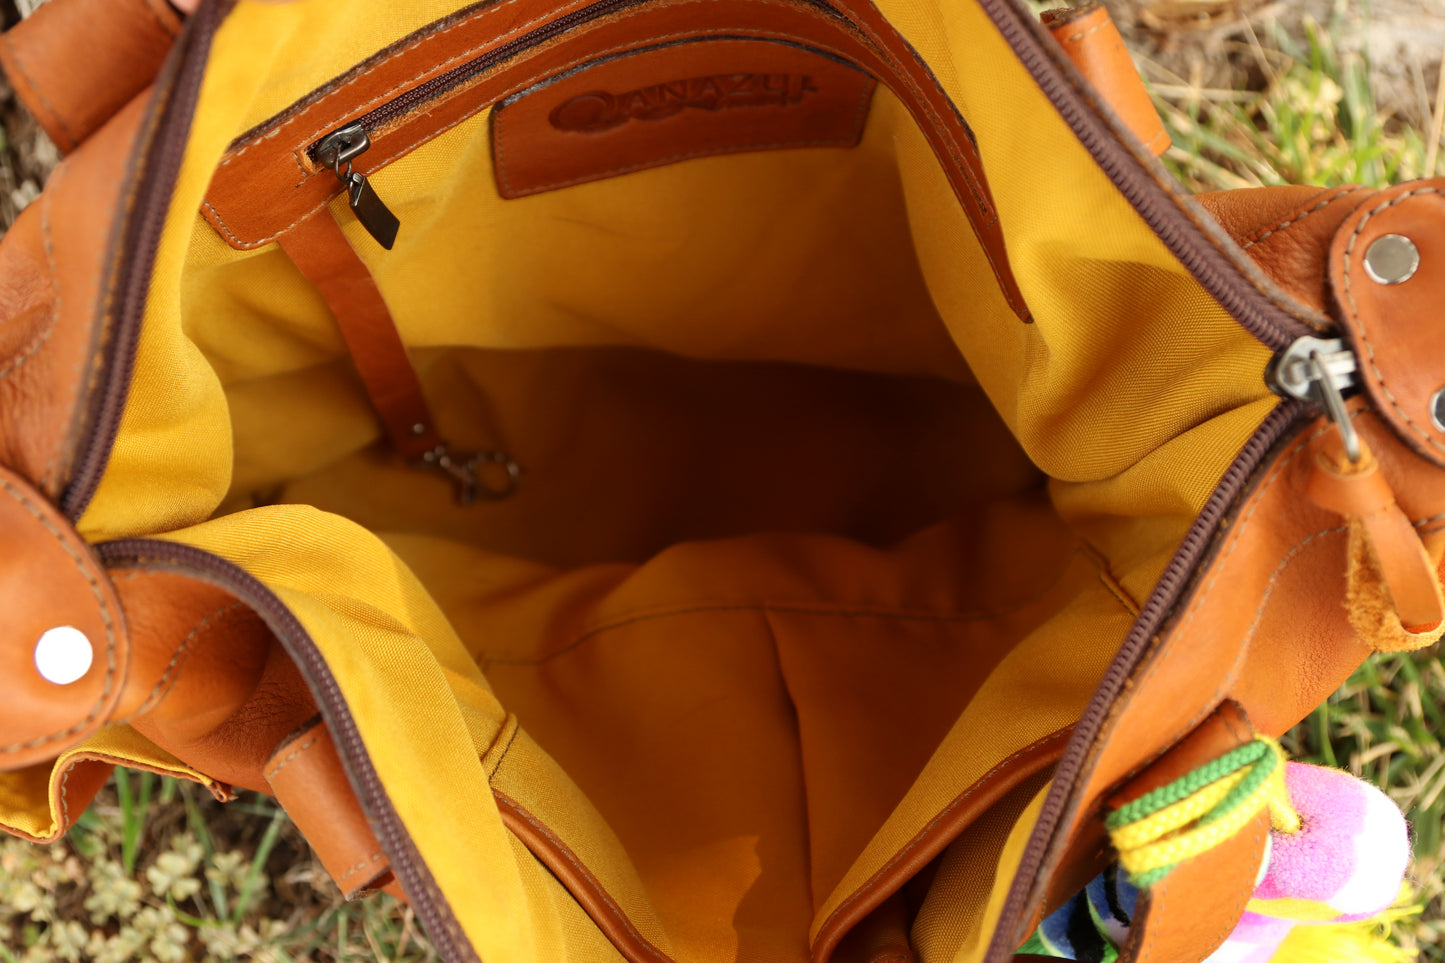 Artisan Bag Convertible Day Bag 100% full grain leather